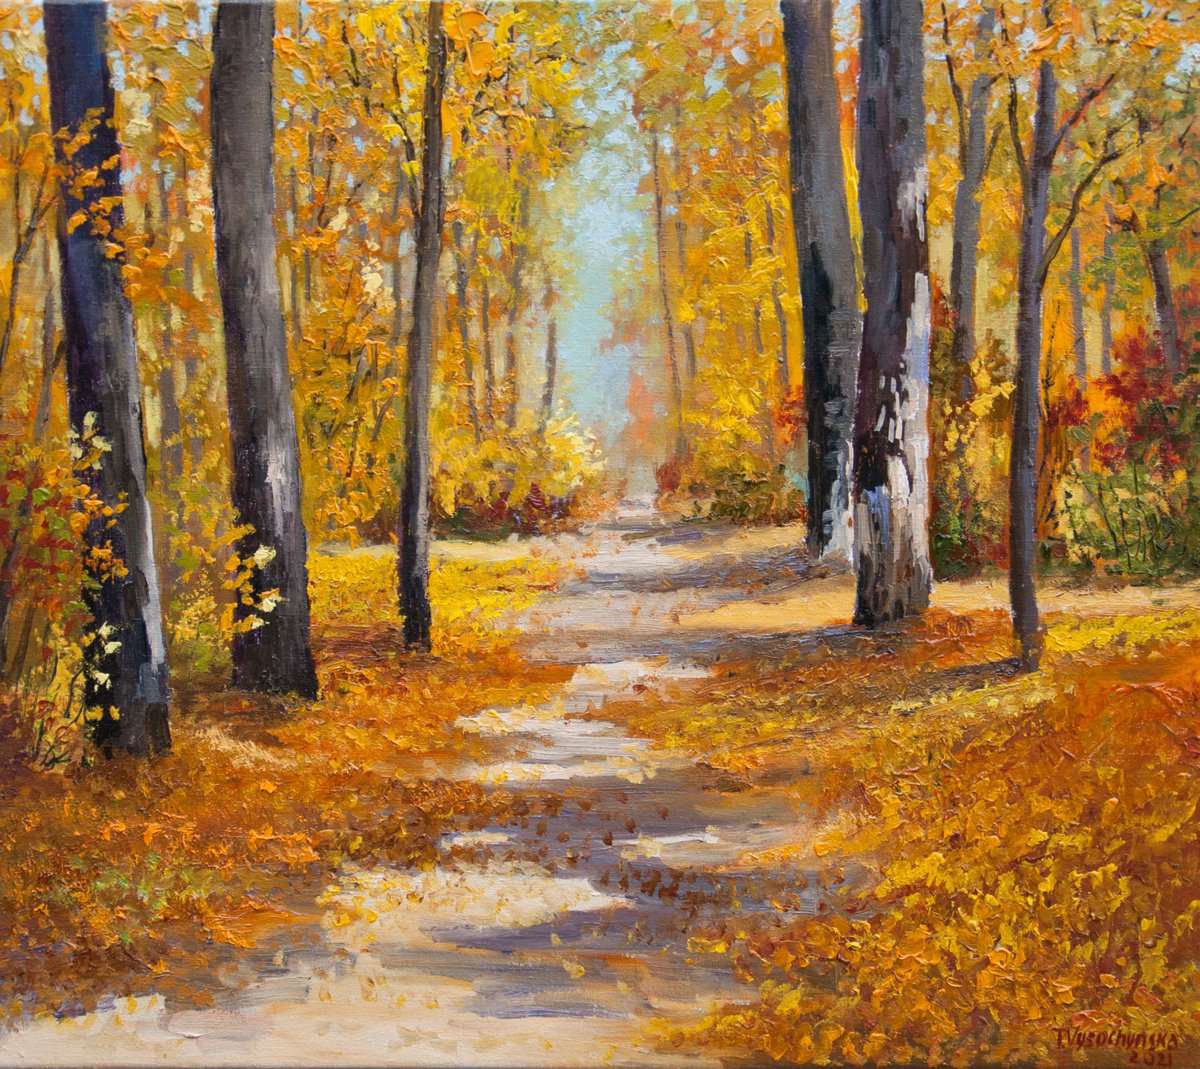 Autumn forest. Oil painting. Fall landscape. Original Art. 14 x 16in. by Tetiana Vysochynska